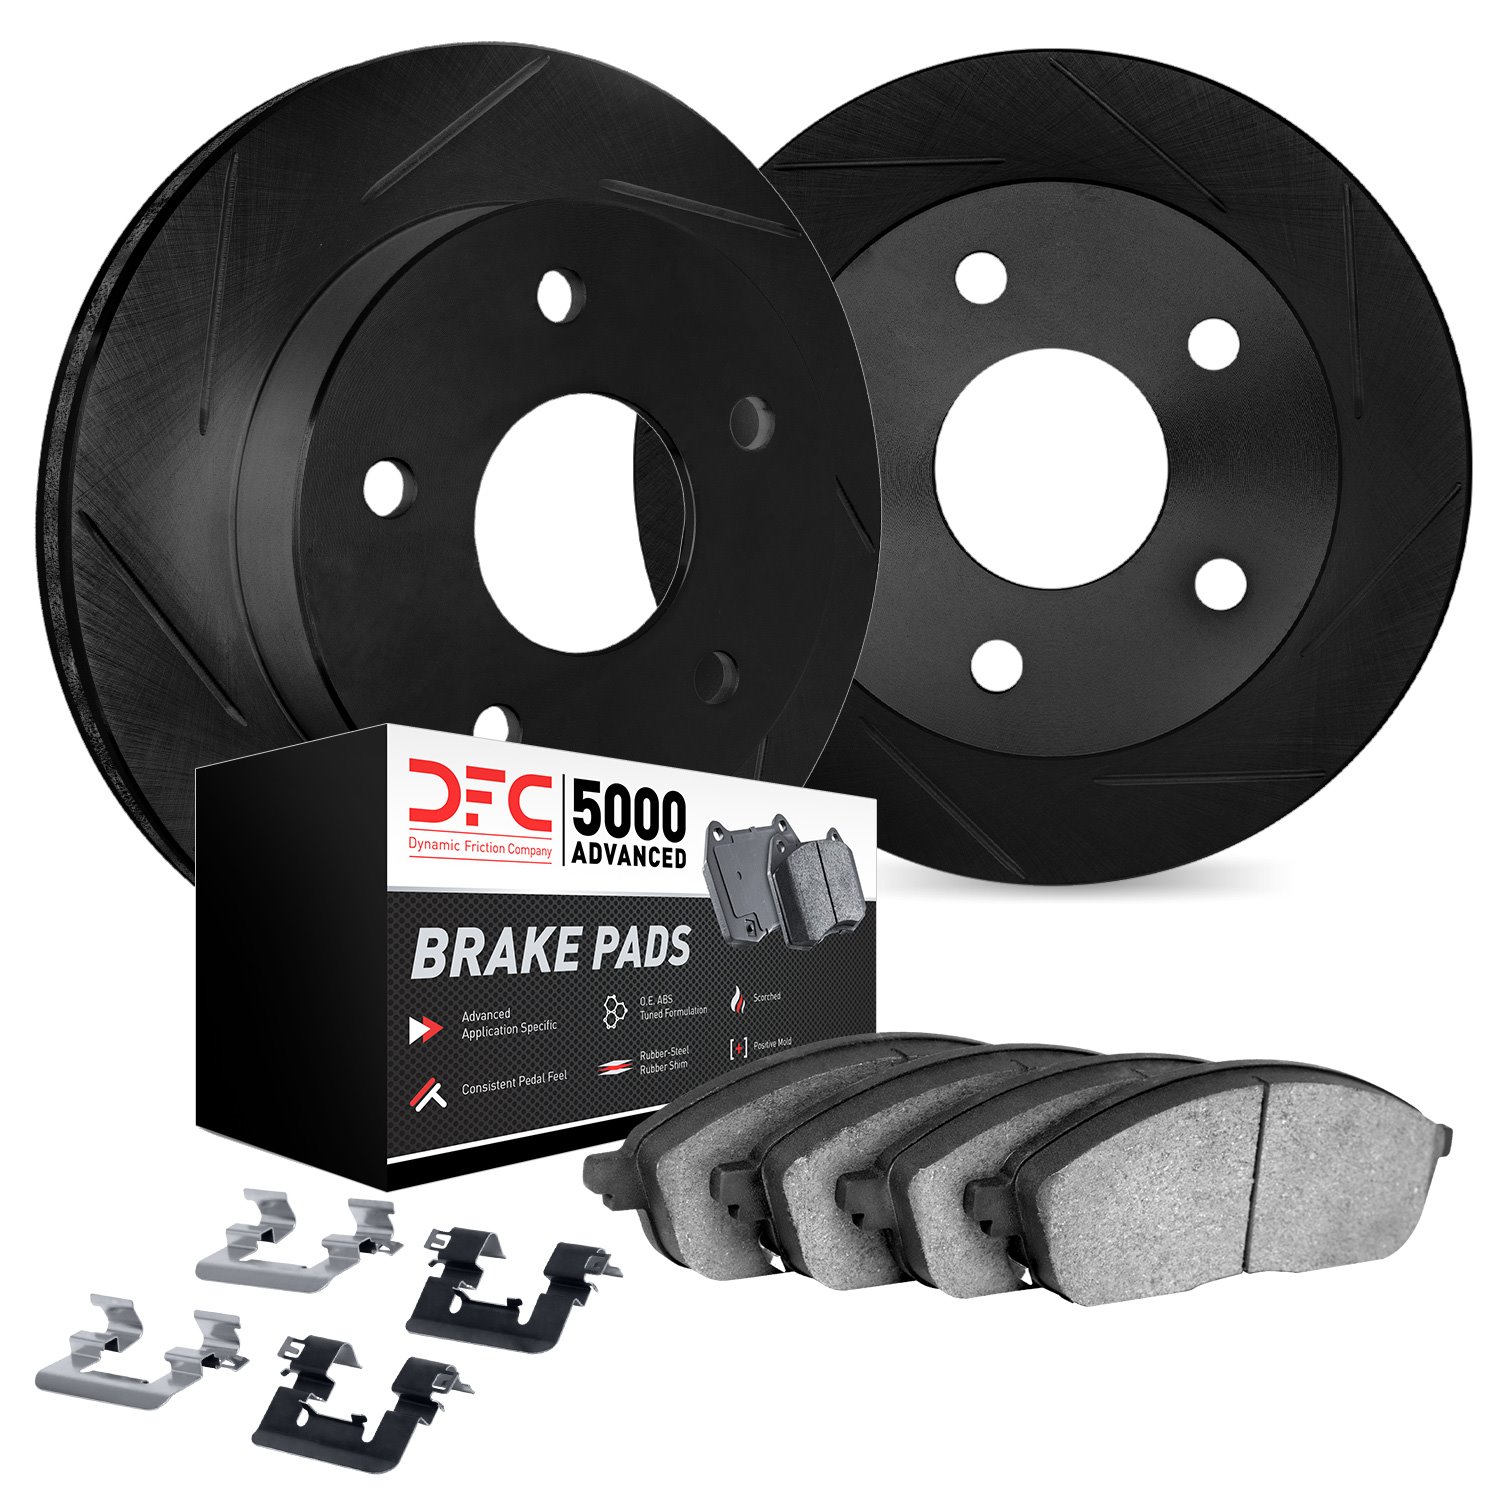 3512-54233 Slotted Brake Rotors w/5000 Advanced Brake Pads Kit & Hardware [Black], 2015-2020 Ford/Lincoln/Mercury/Mazda, Positio